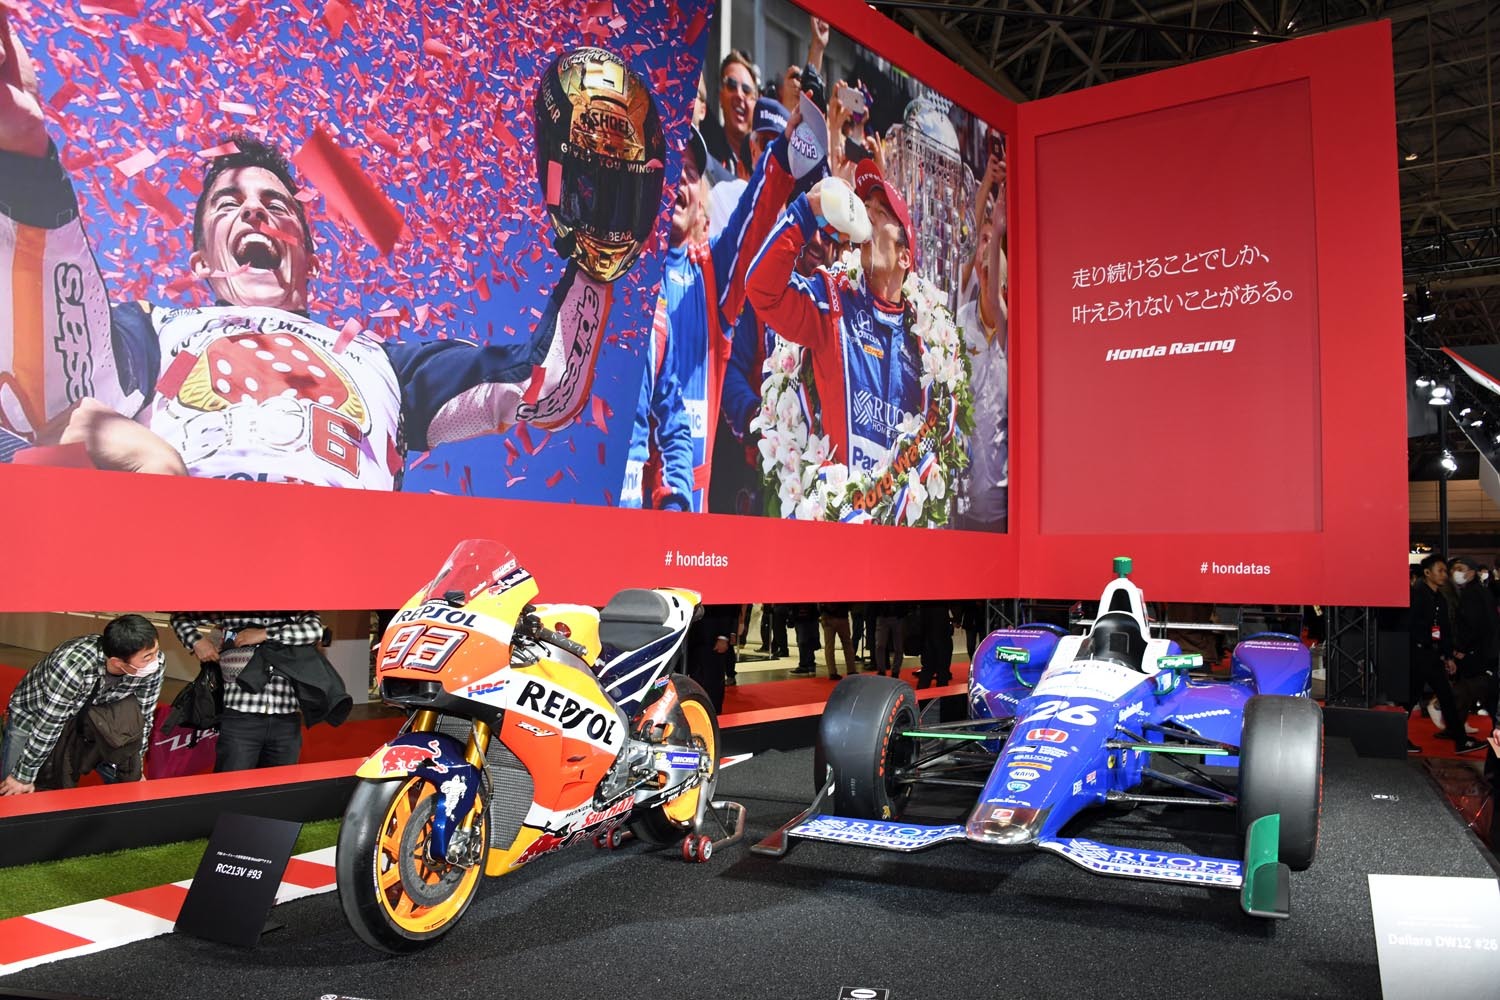 Hondaはインディ500で優勝した佐藤琢磨のマシンを展示。モータースポーツでの活躍をアピールしていた